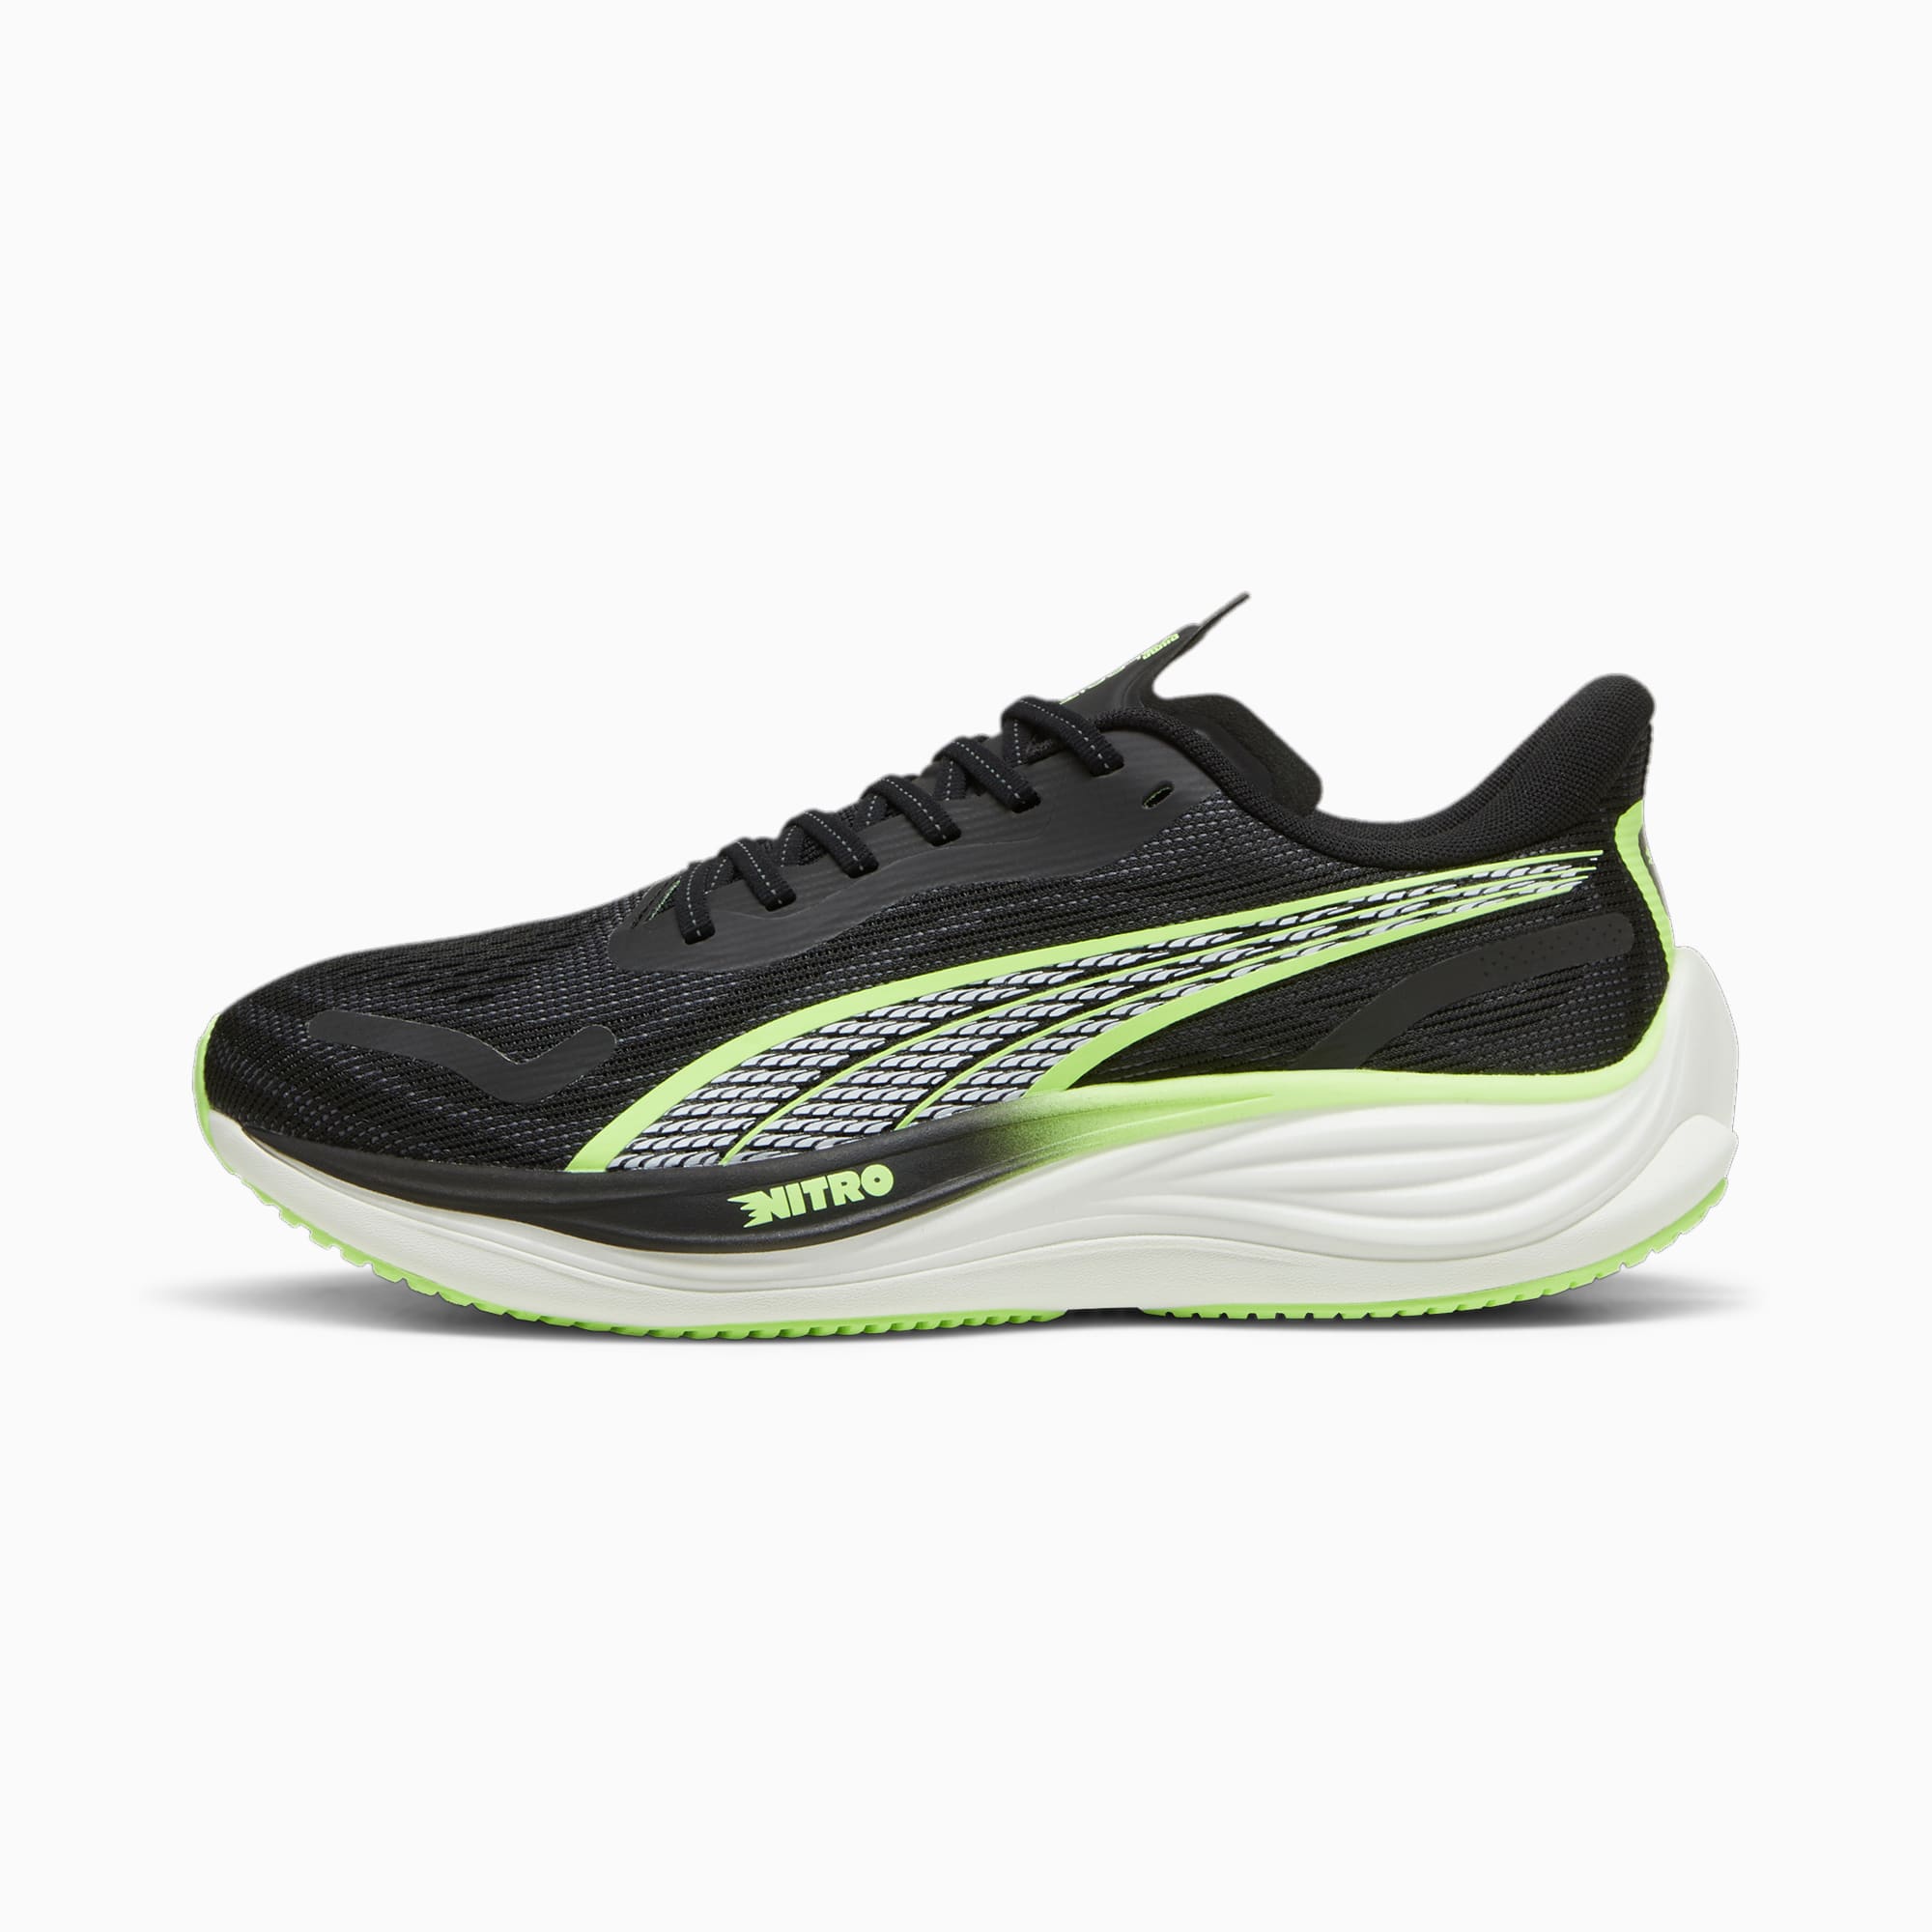 PUMA Velocity Nitroâ¢ 3 Men's Running Shoes